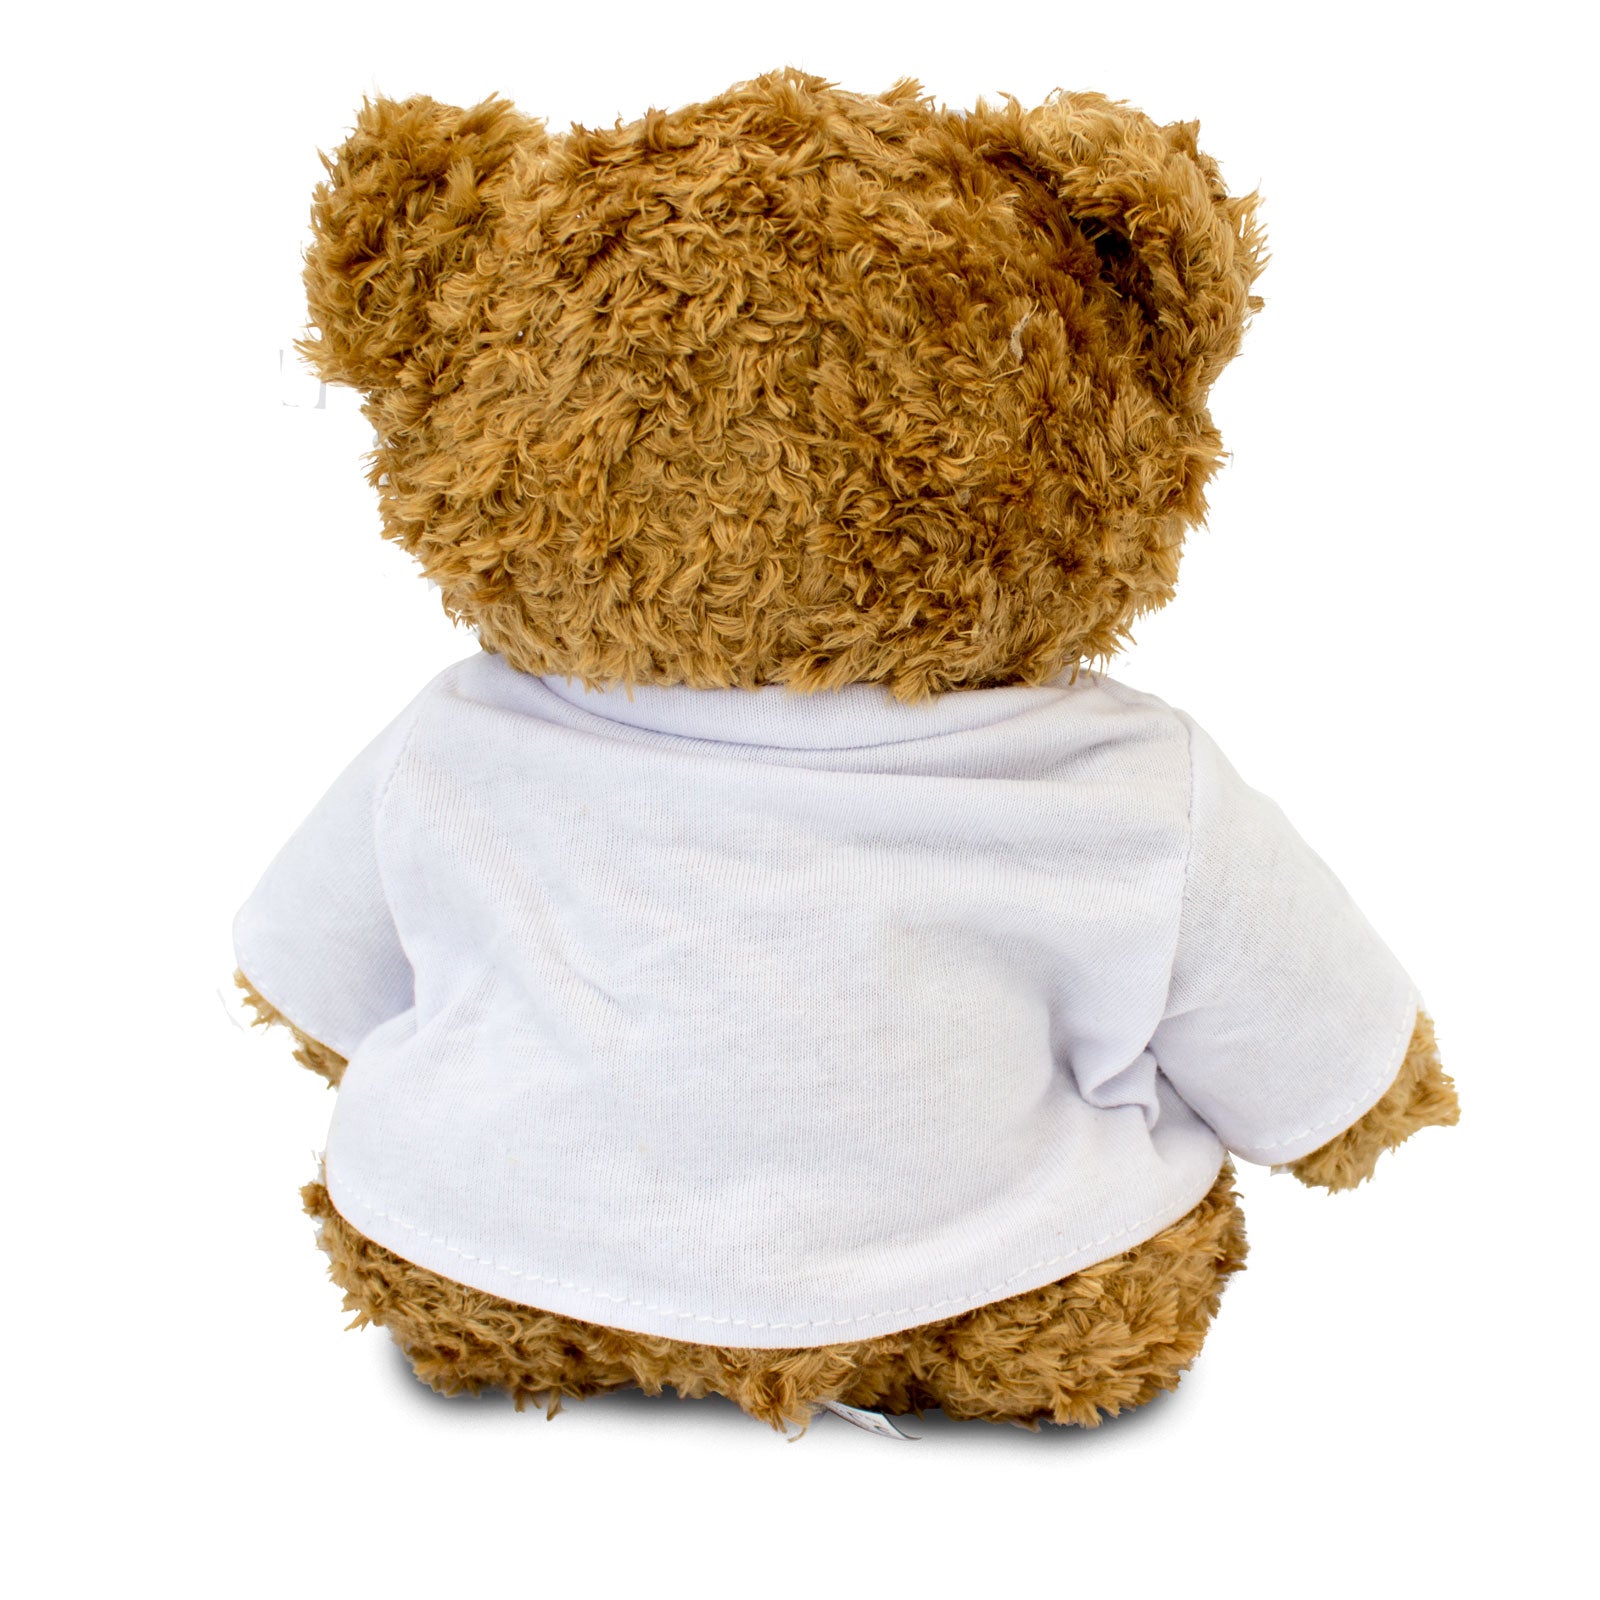 Get Well Soon Anders - Teddy Bear